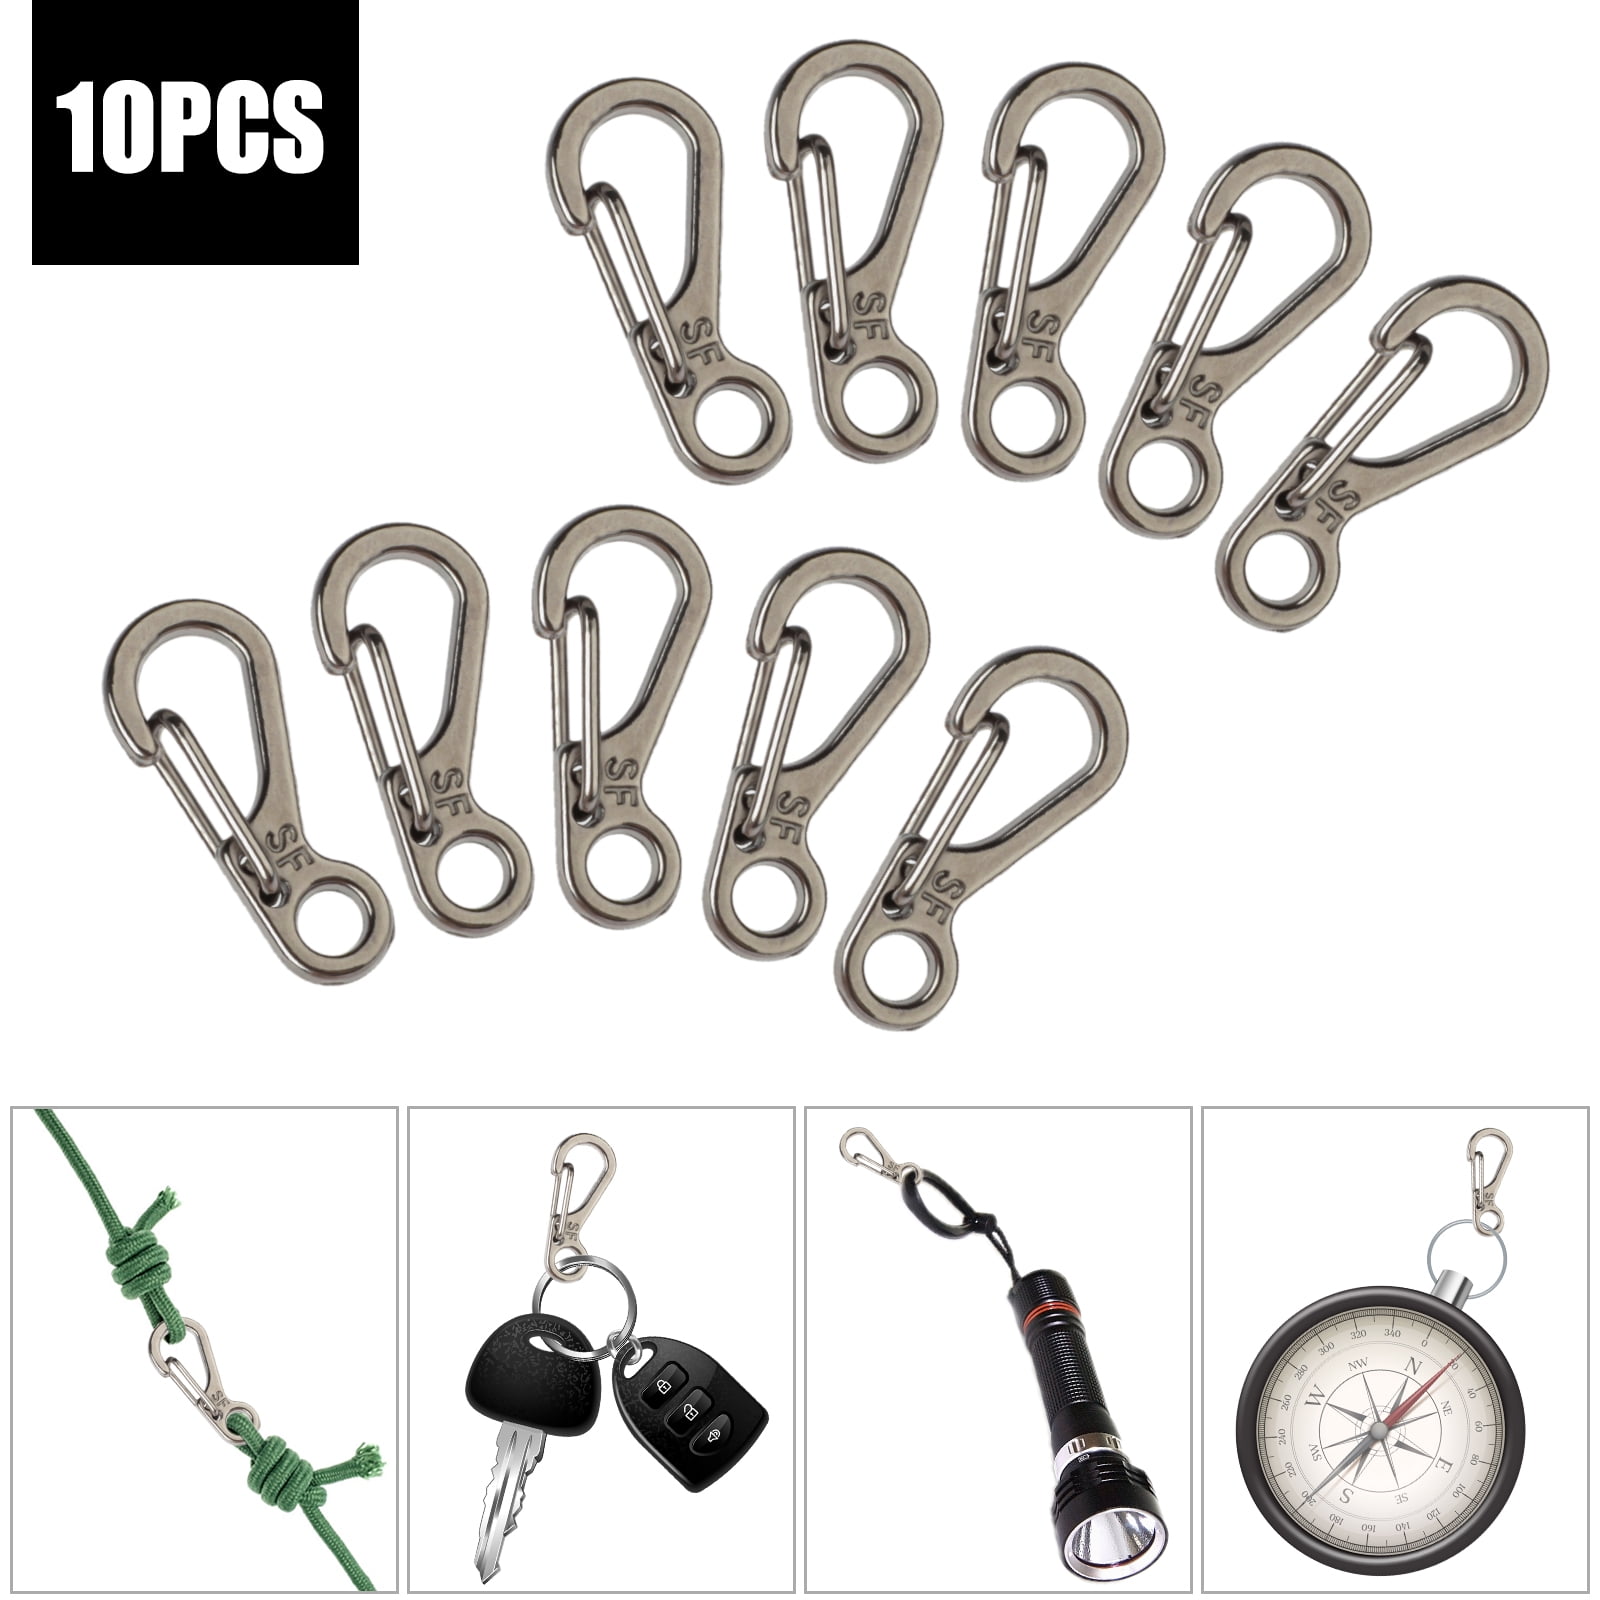 10pcs Tiny Spring Snap Hook, EEEkit Mini SF Alloy Carabiners Clip